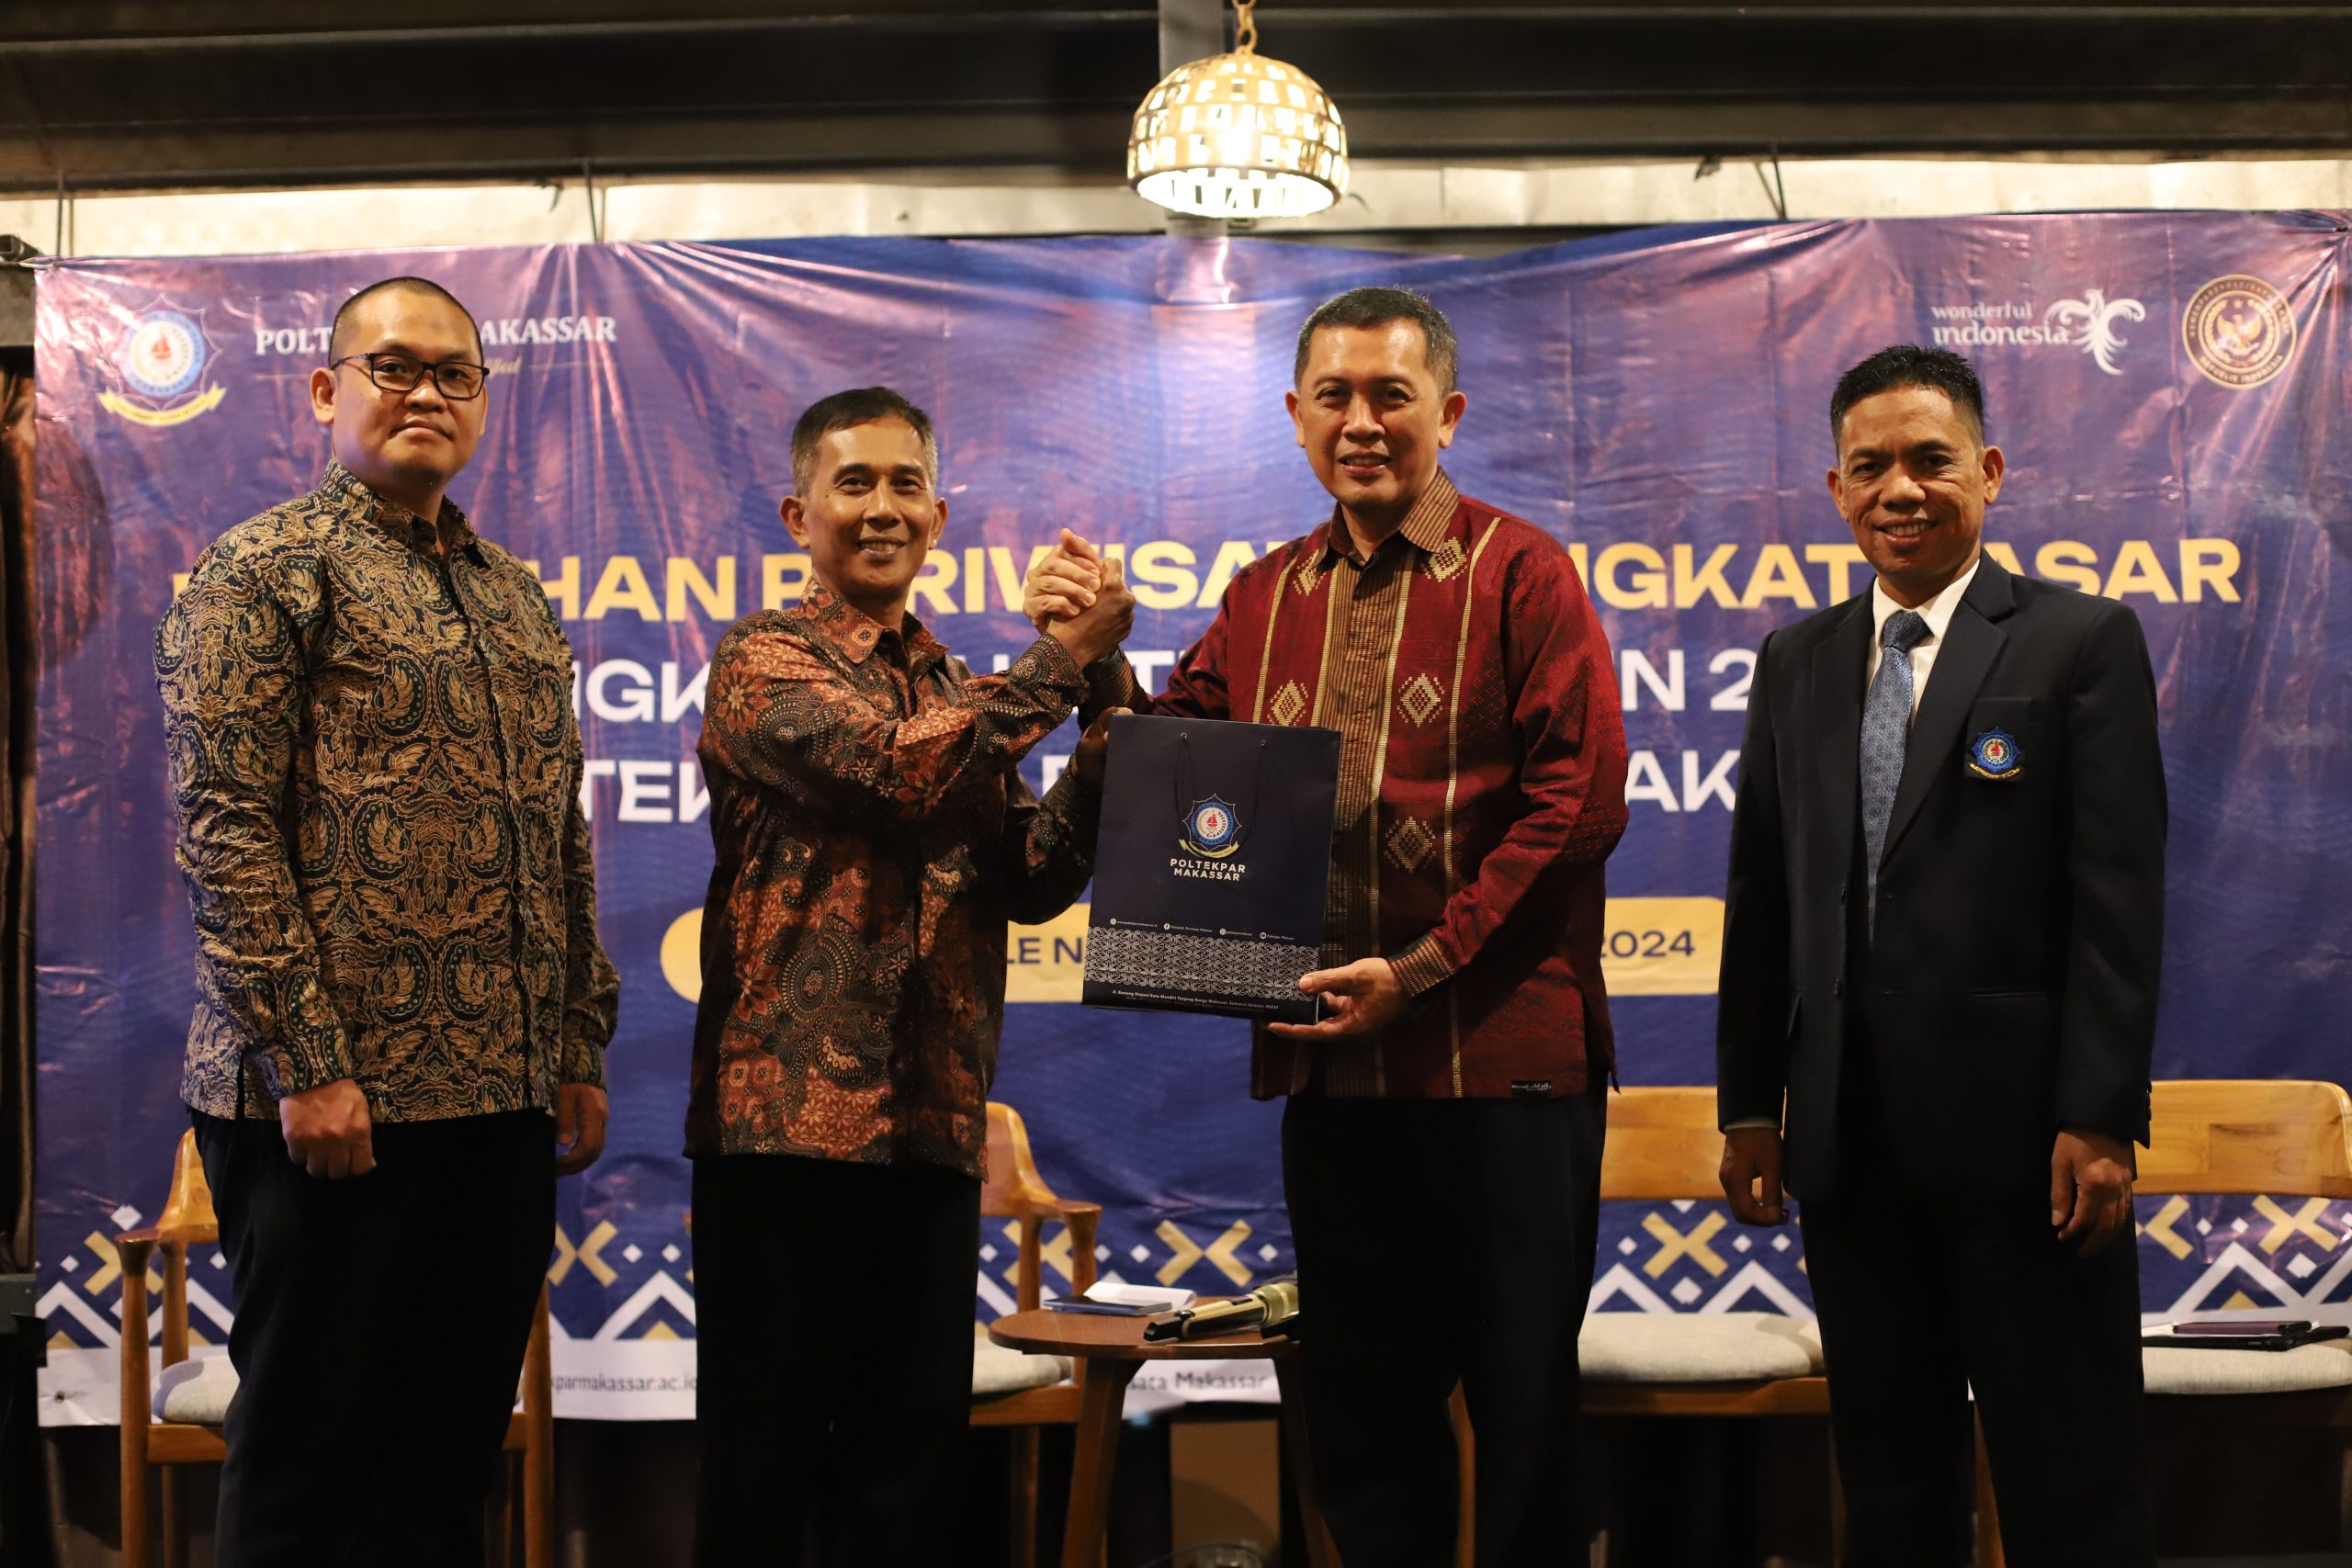 Bersama Pusbang SDM Kemenparekraf, Poltekpar Makassar Gelar Diklat Pariwsata dan Ekonomi Kreatif Tingkat Dasar